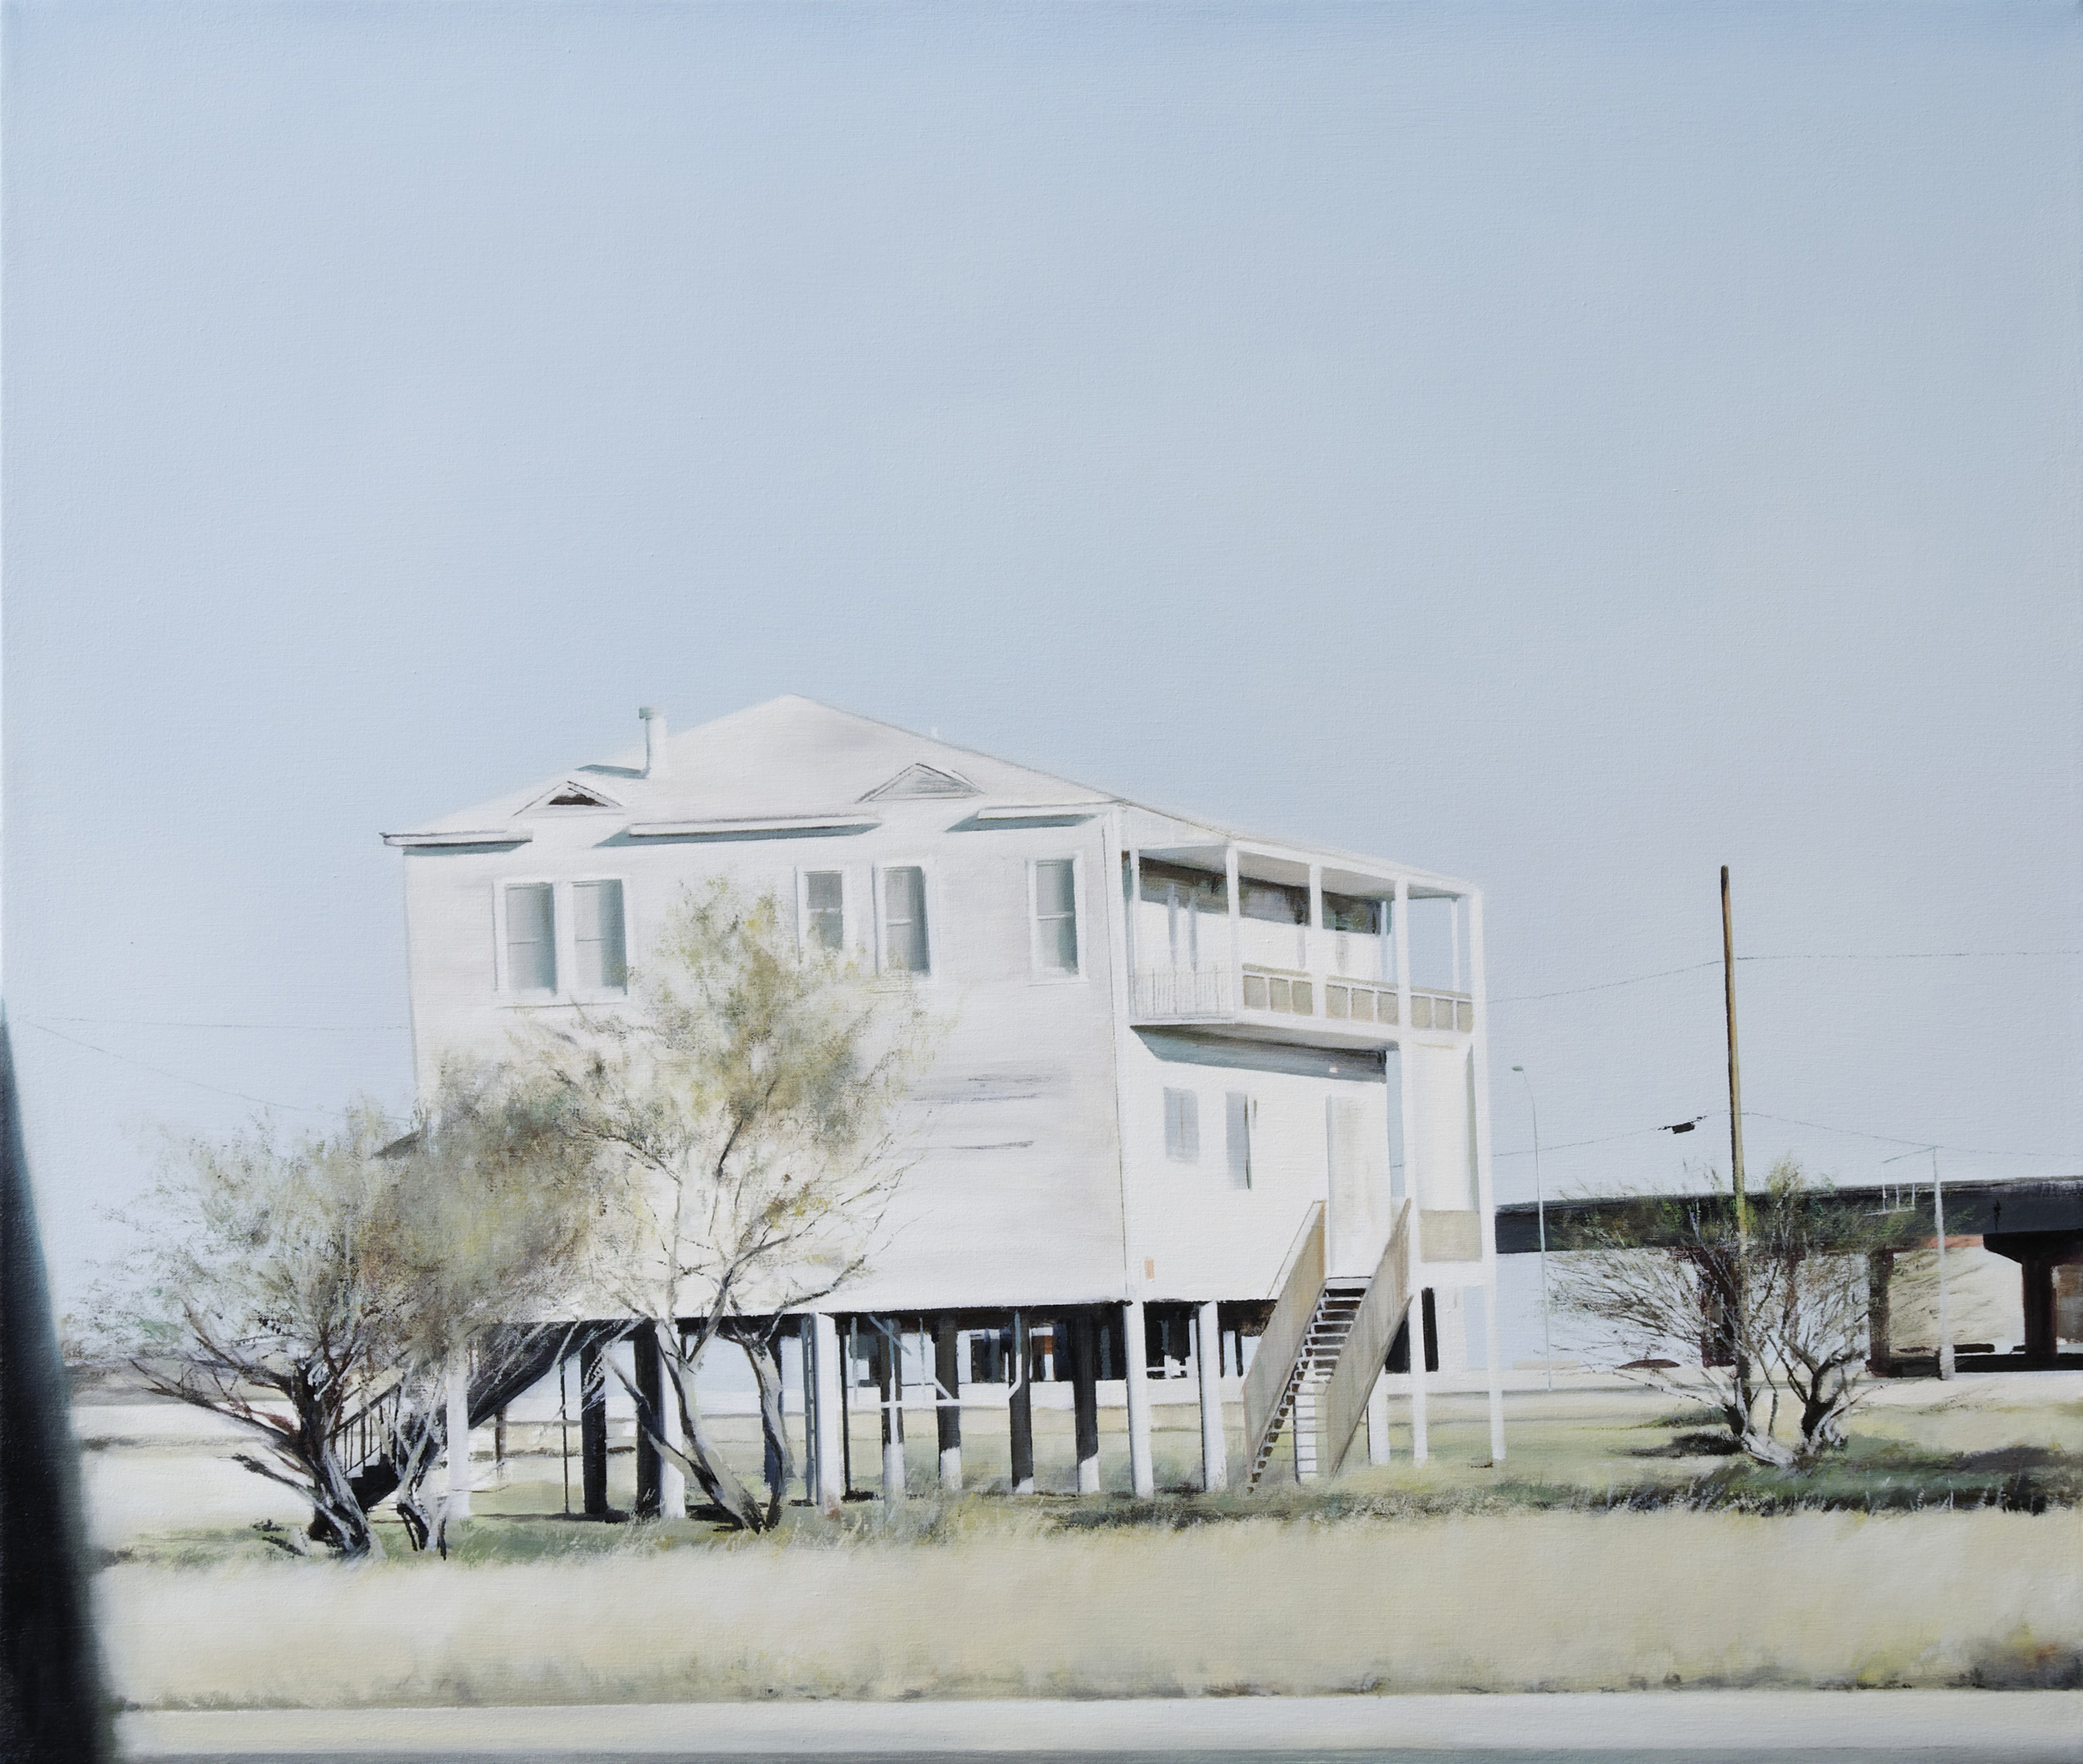   house on stilts&nbsp;&nbsp; •  34" x 40"  oil on canvas  2011    